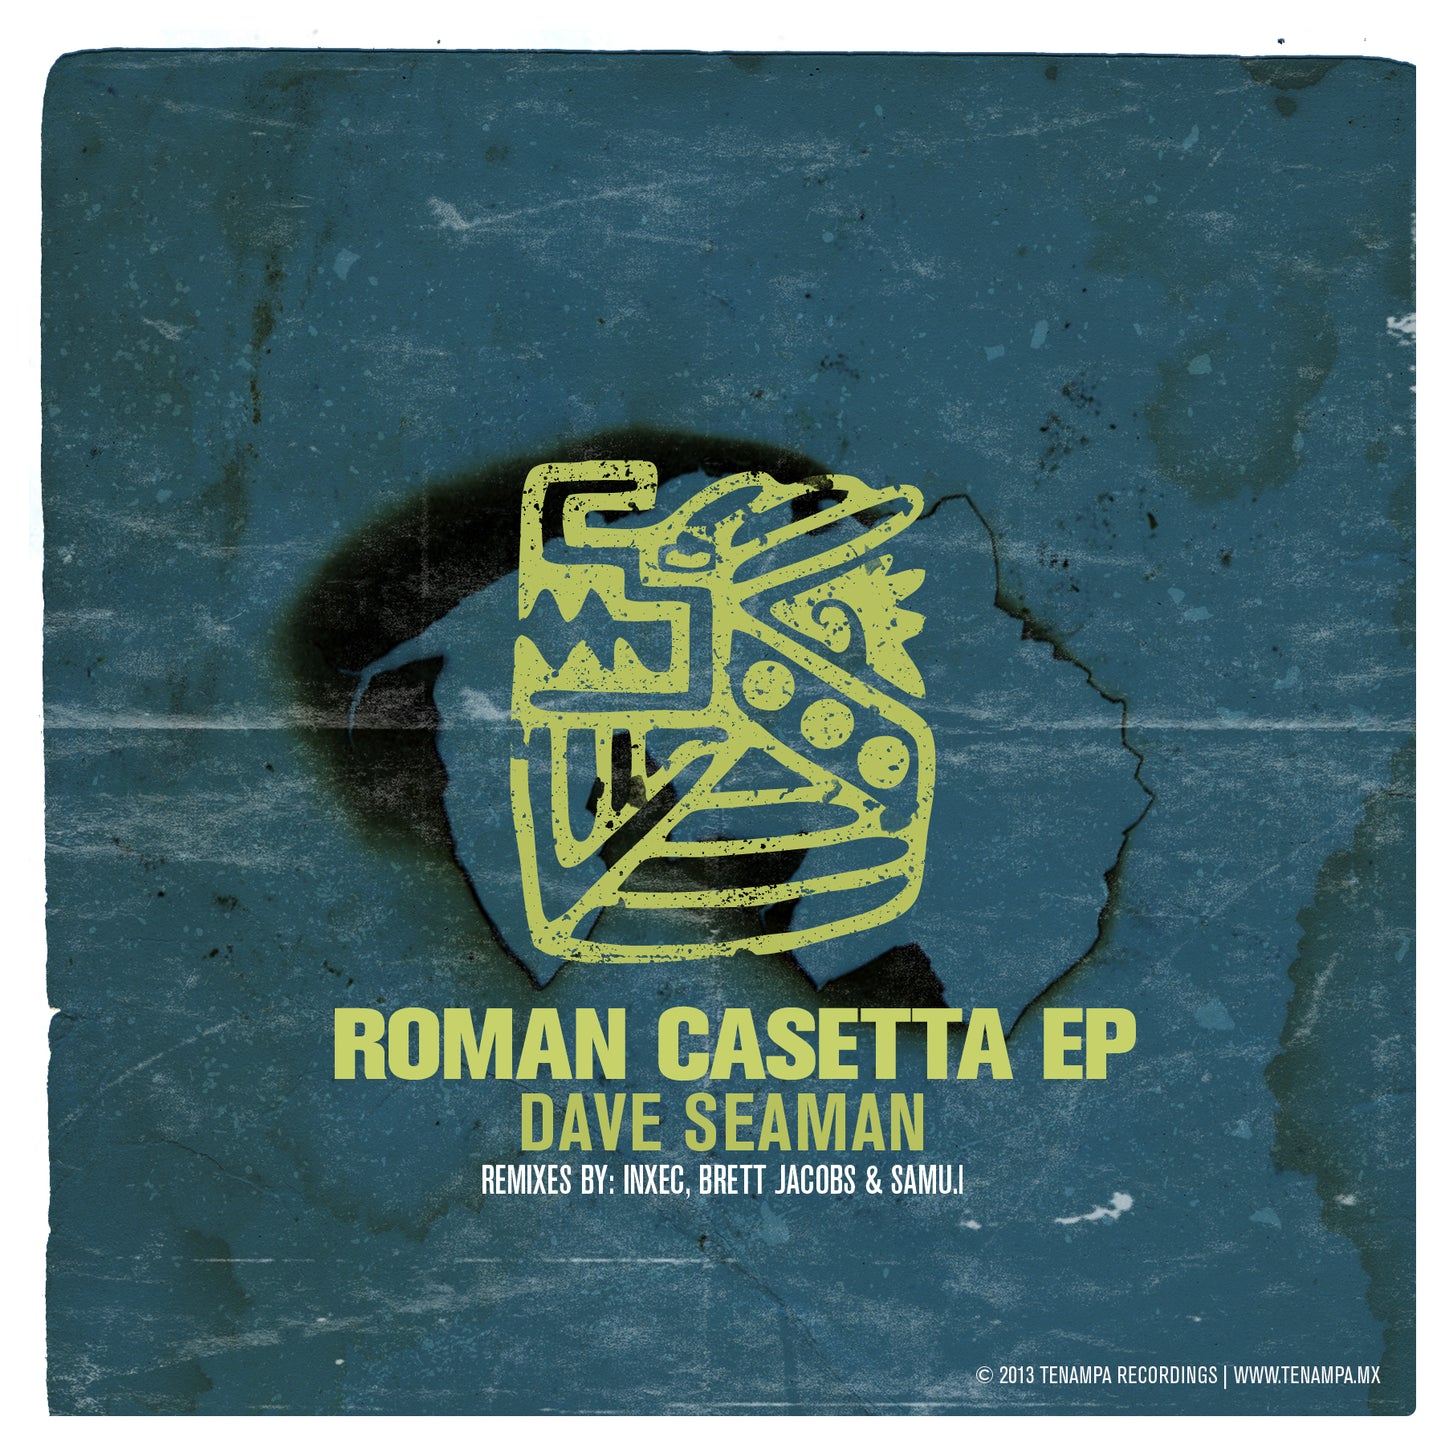 Dave Seaman - Roman Casetta w/ Inxec, Brett Jacobs & Samu.l Remixes